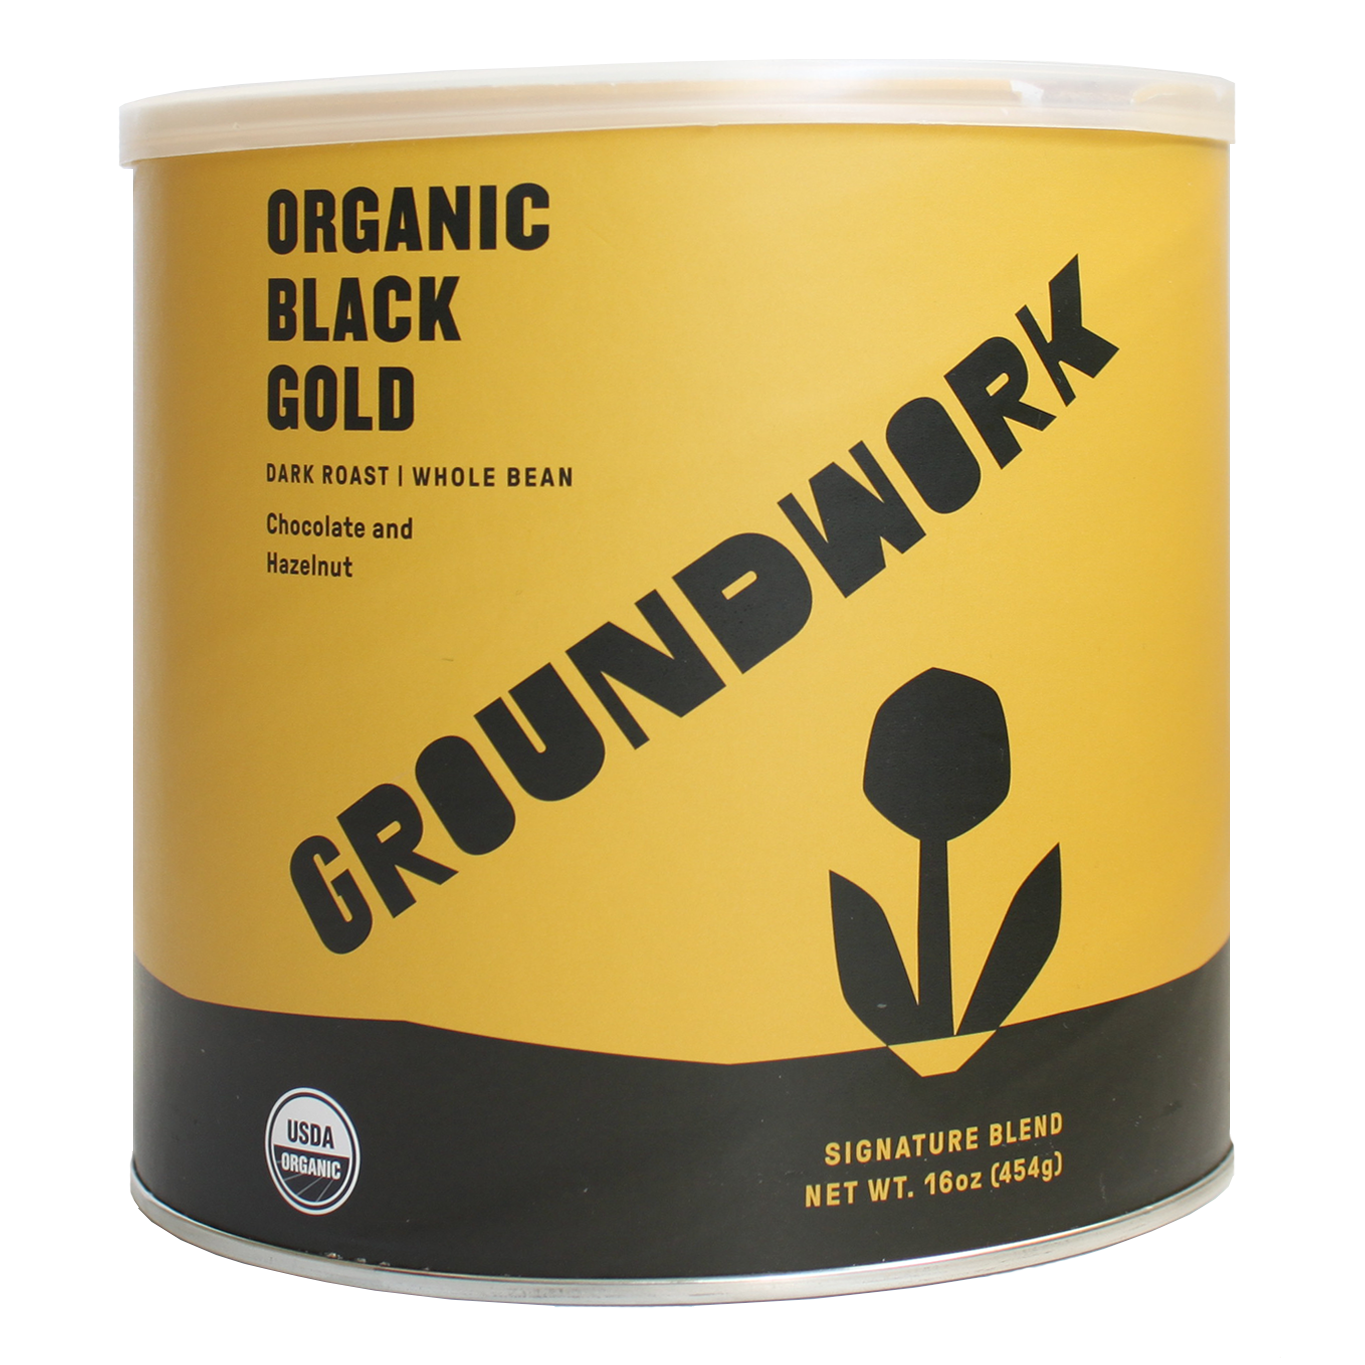 1 lb can of Organic Black Gold Dark Roast 